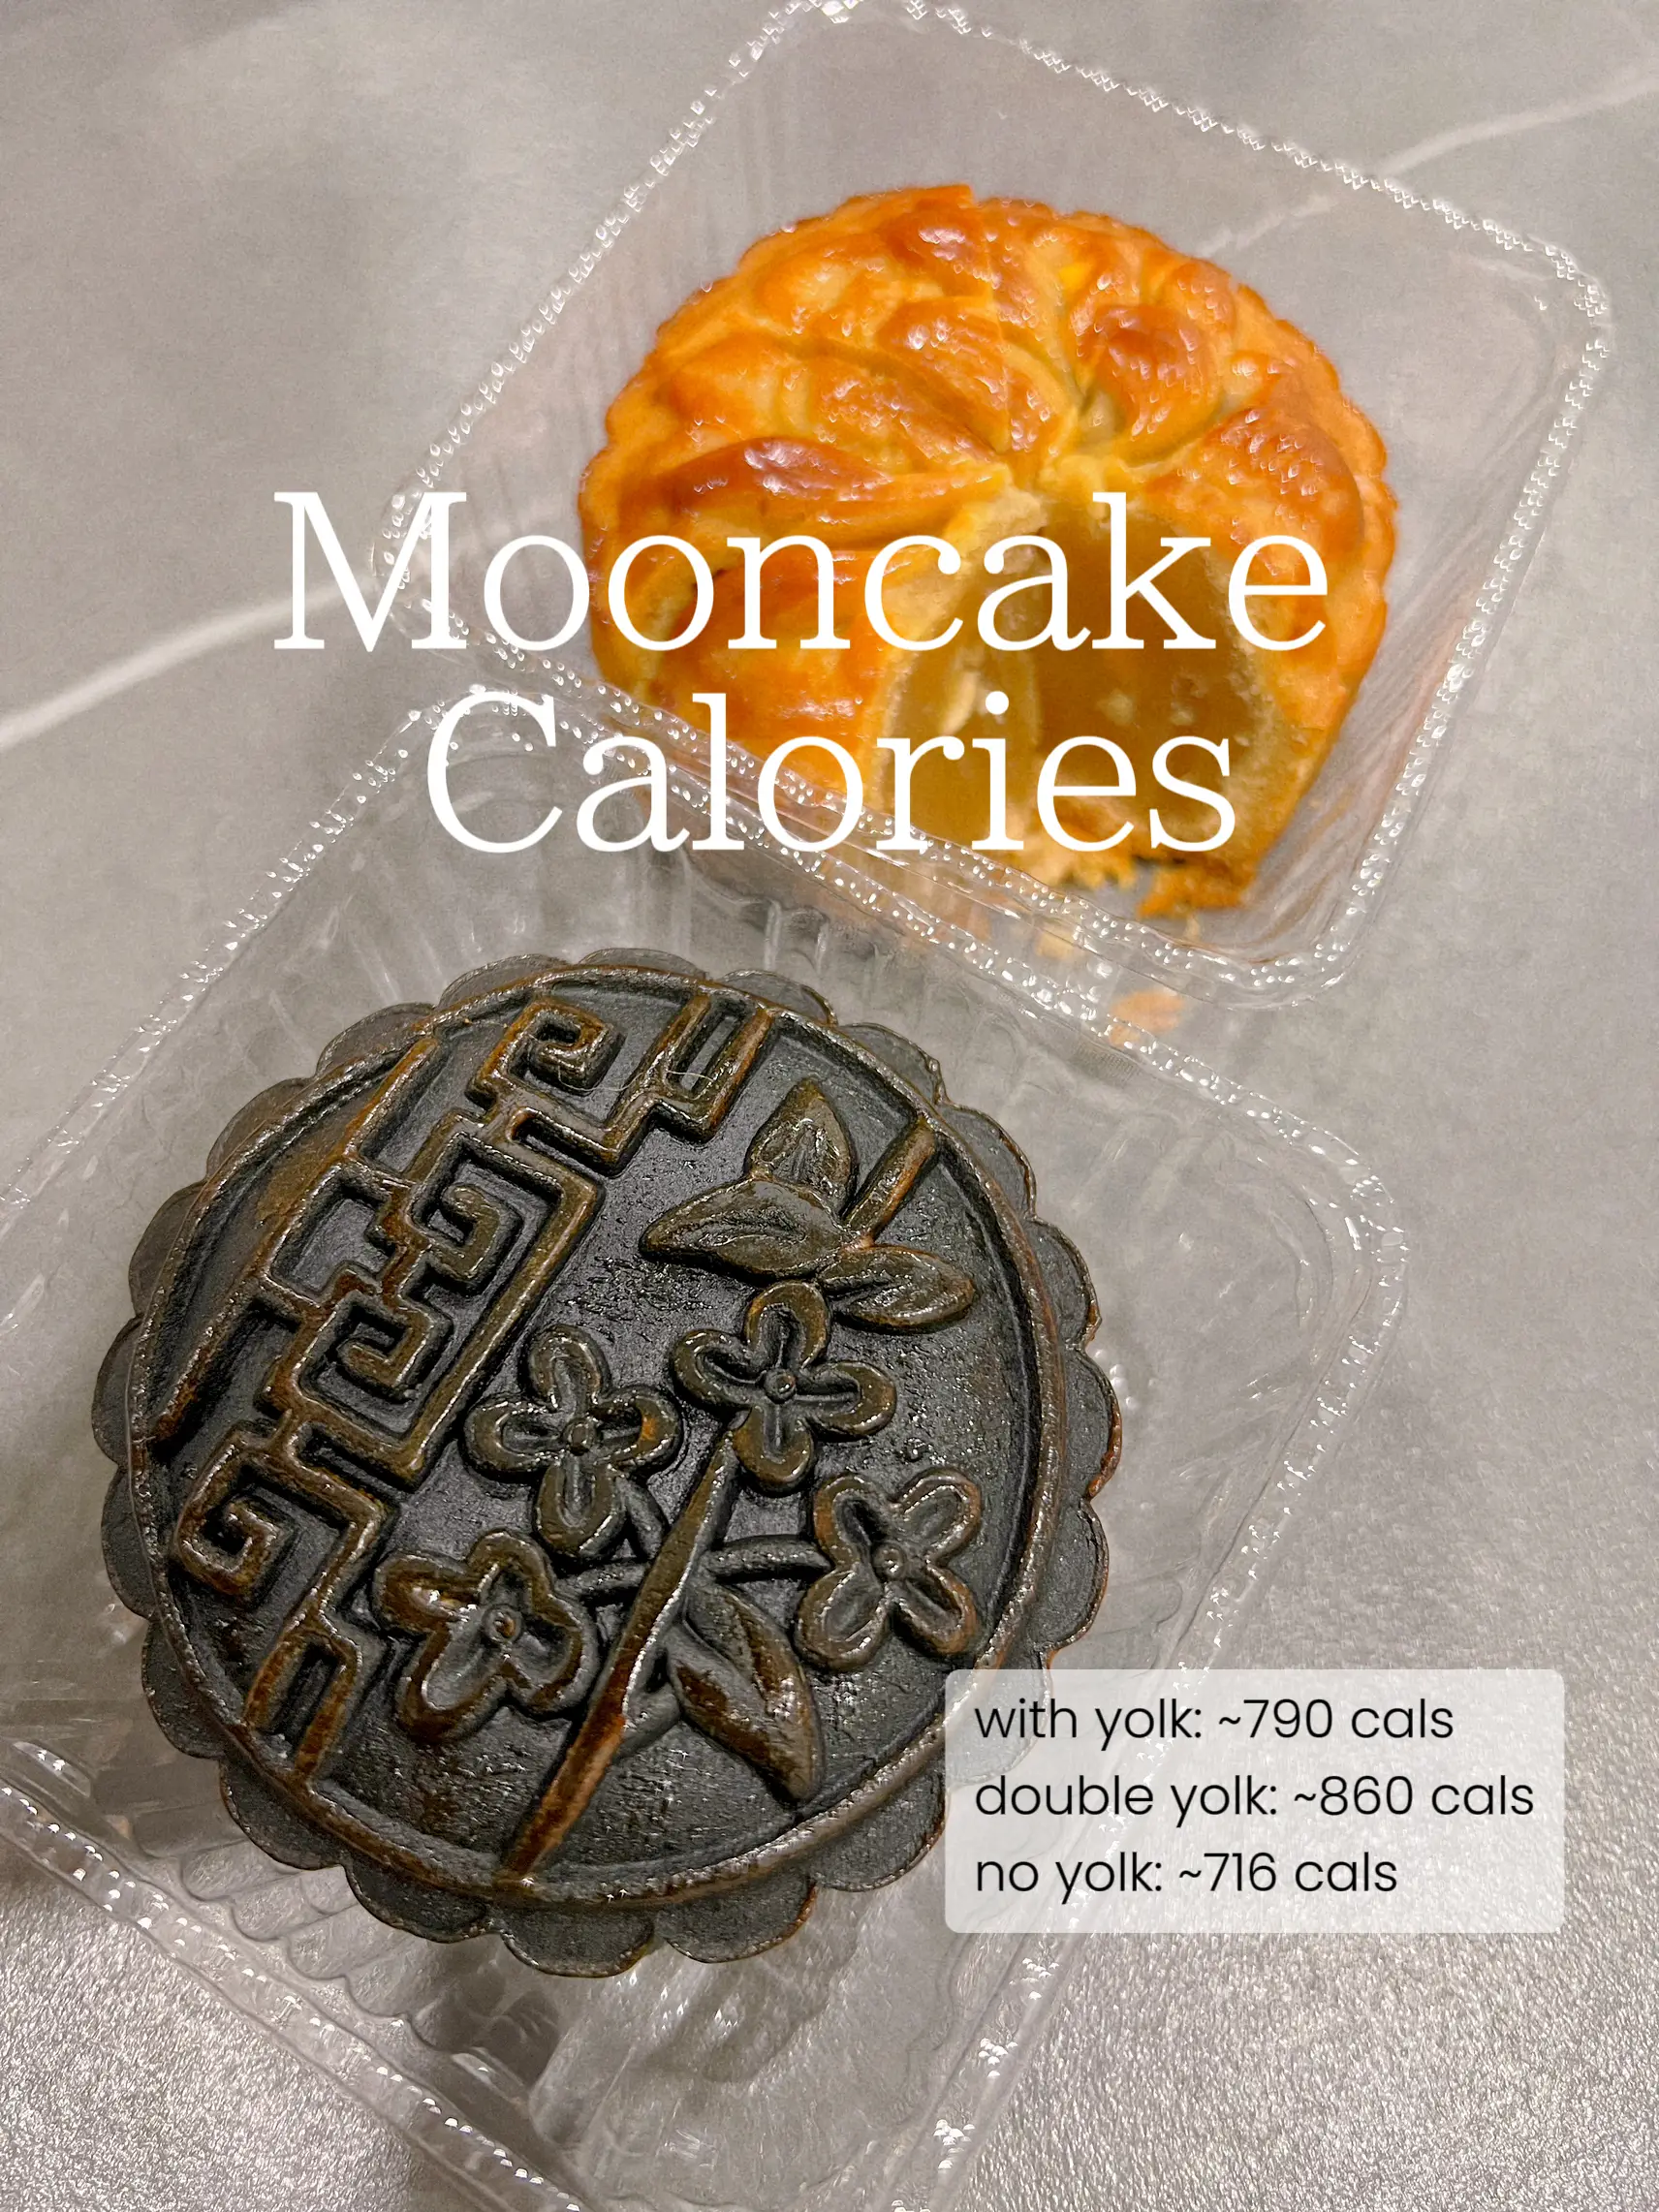 mylifestylenews: Ying Jee Club Presents Classic Mini Egg Custard Mooncakes